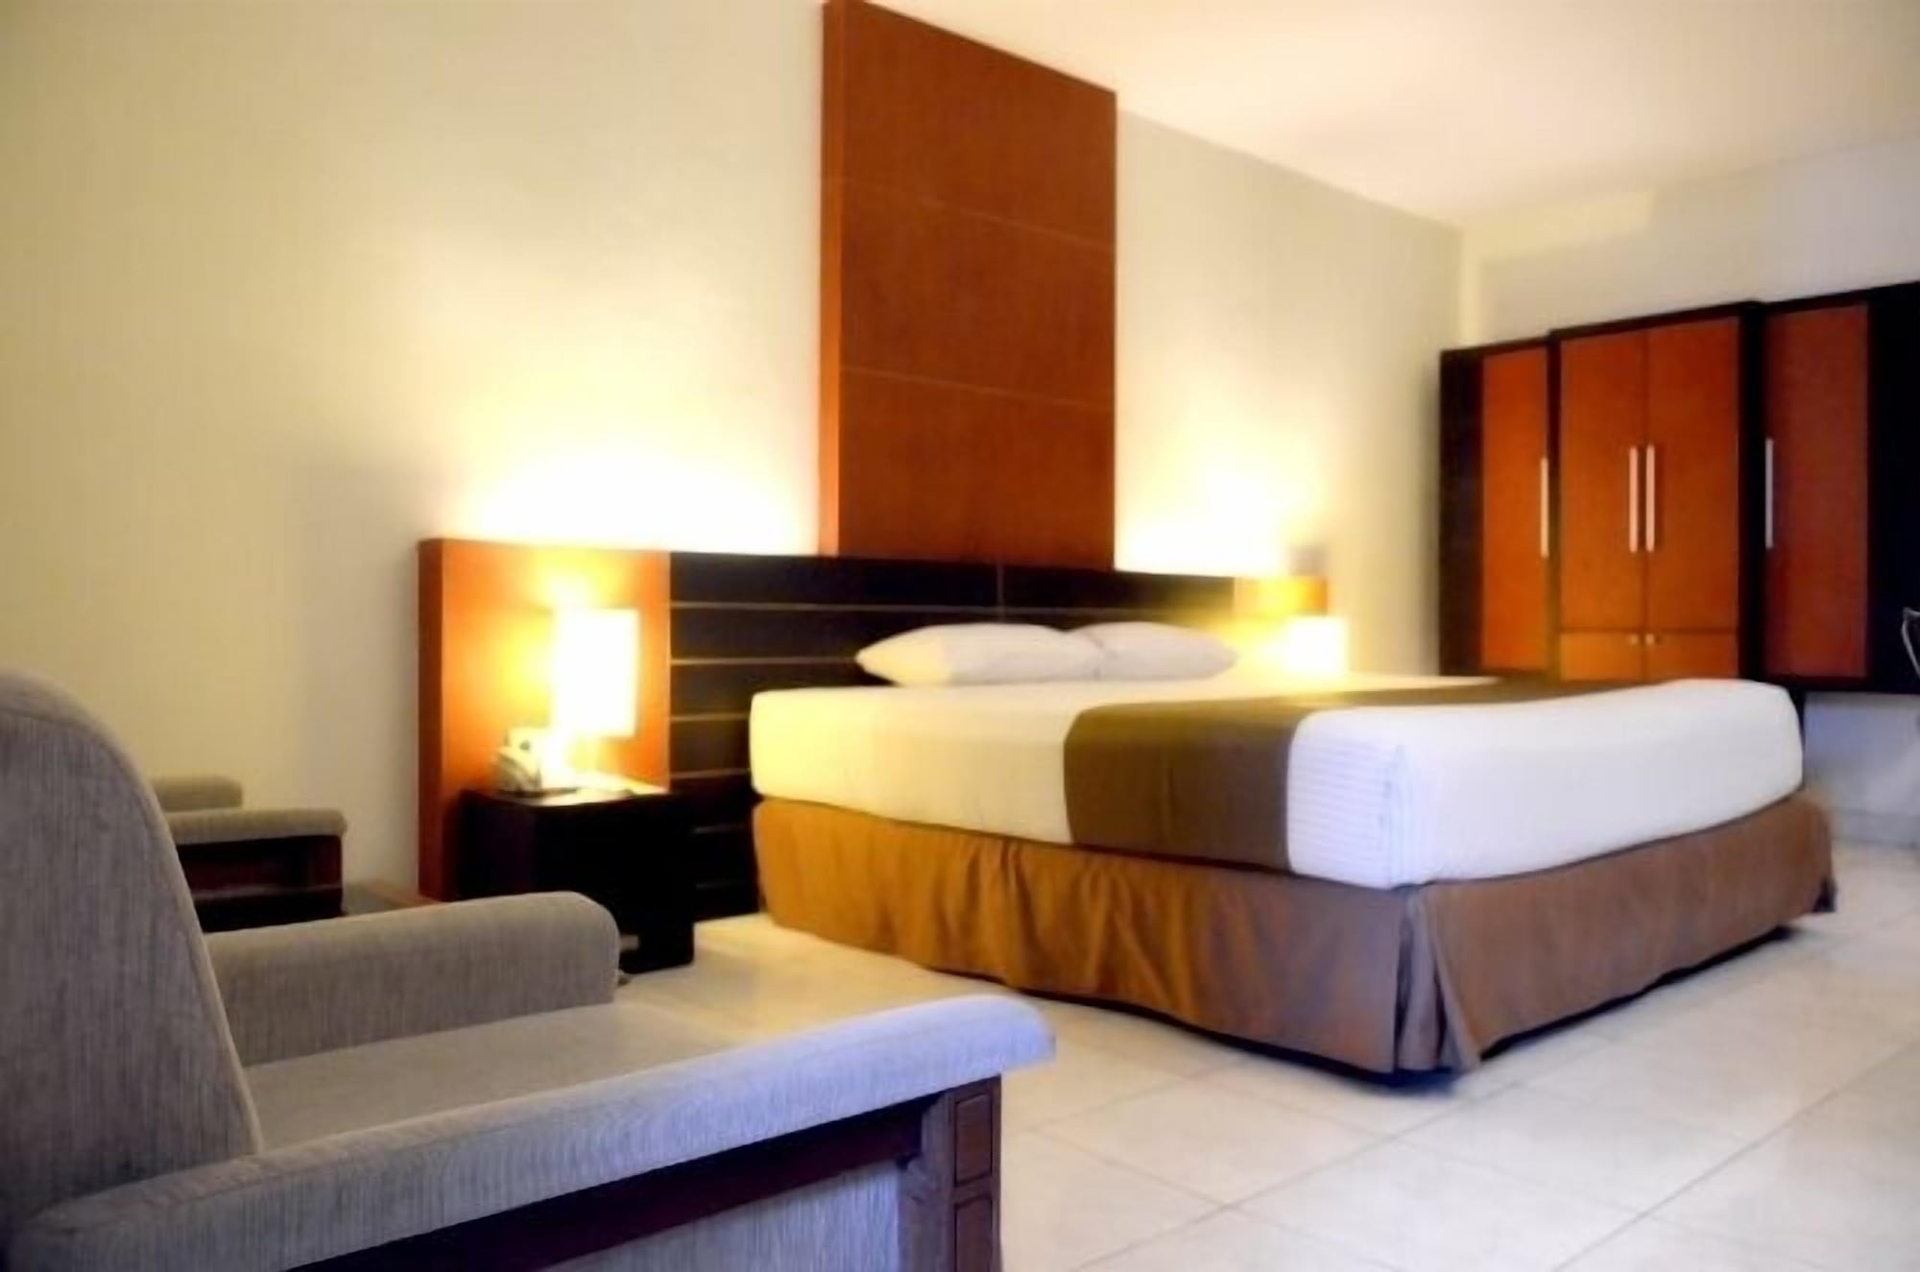 Bedroom 3, Hotel LPP Convention, Yogyakarta